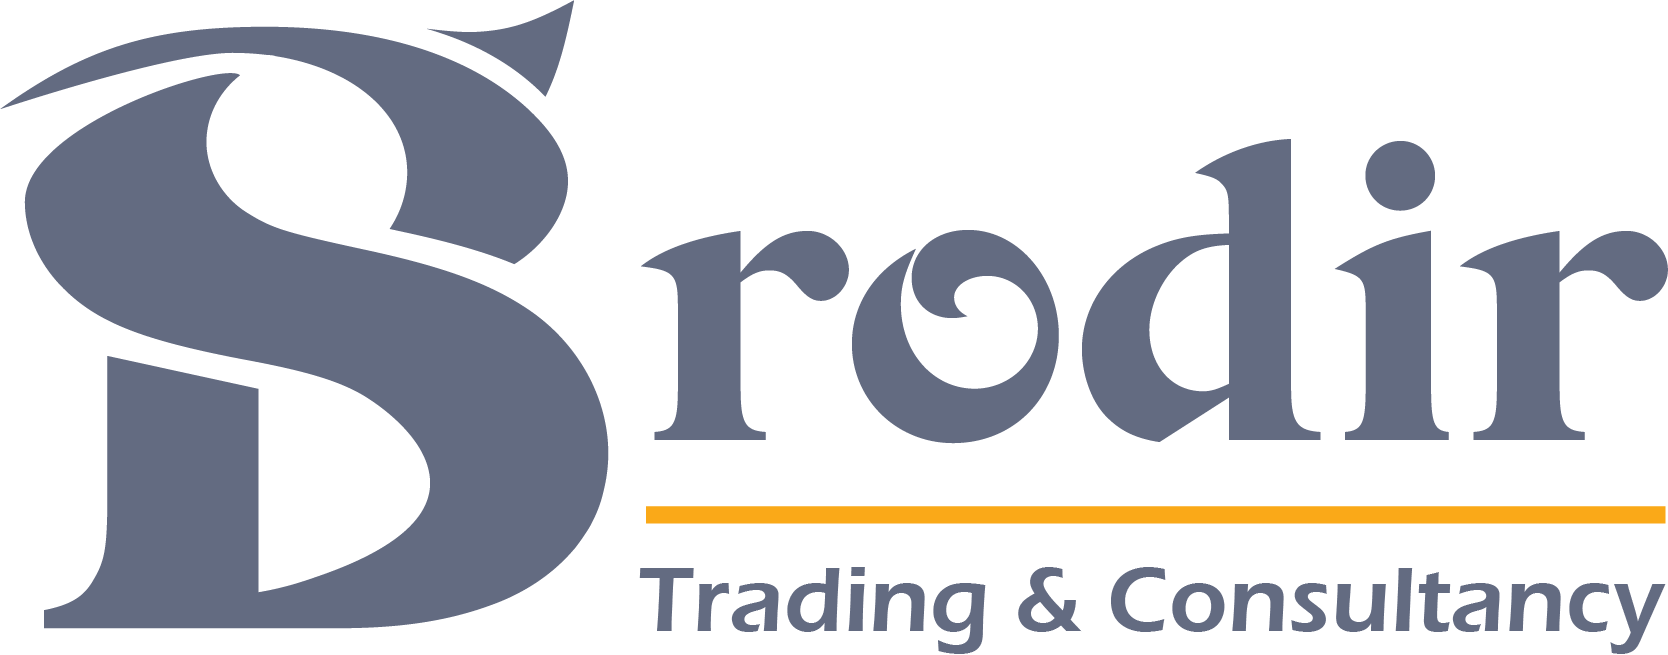 Brodir Trading & Consultancy